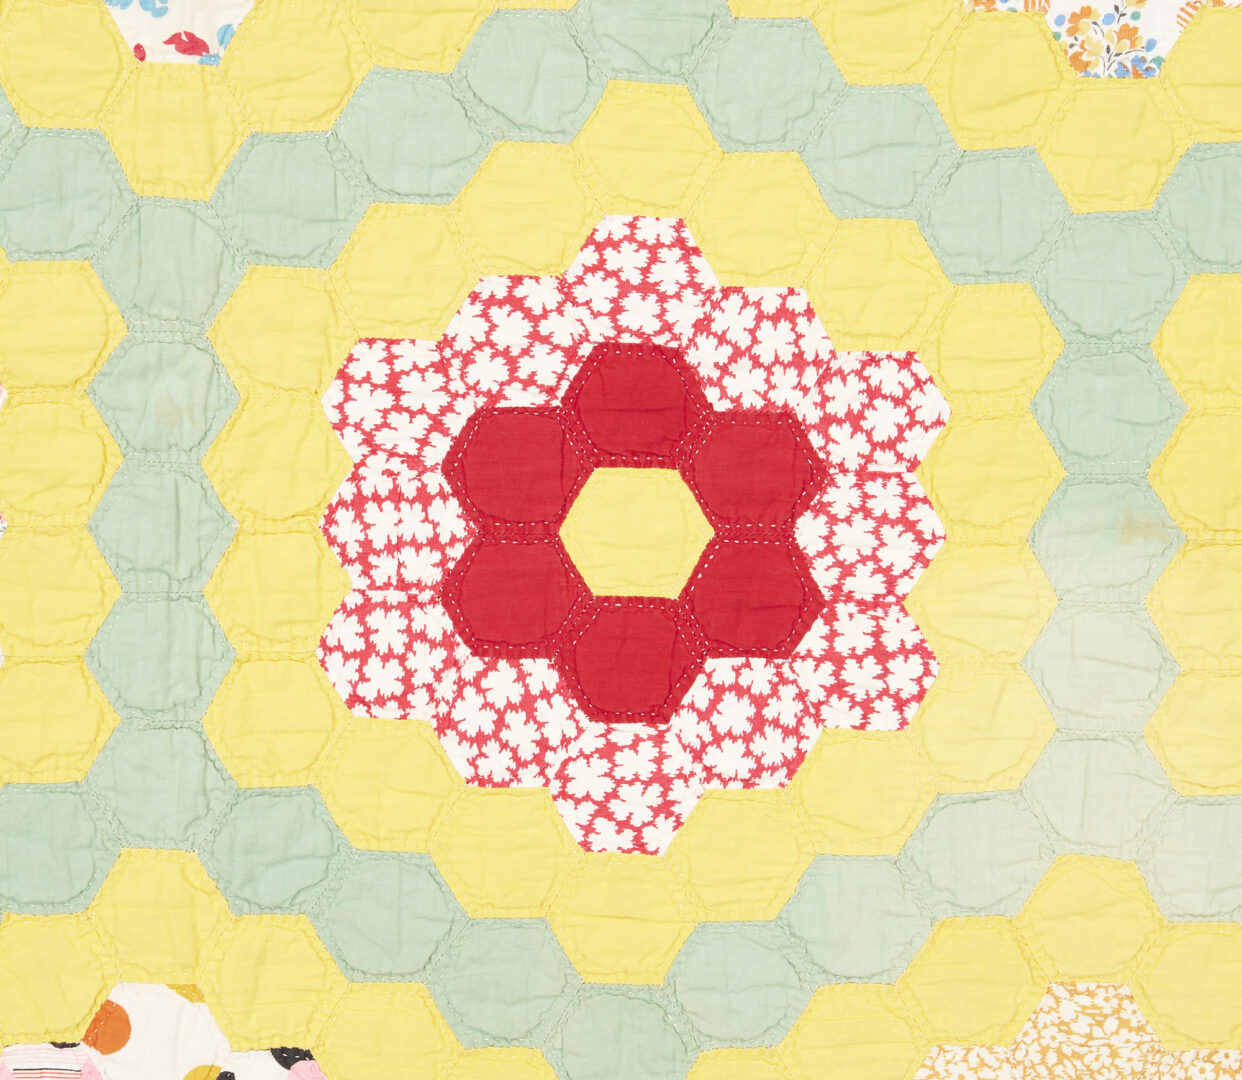 Lot 184: 2 American Quilts incl. Grandmother's Garden, Pinwheel Patterns